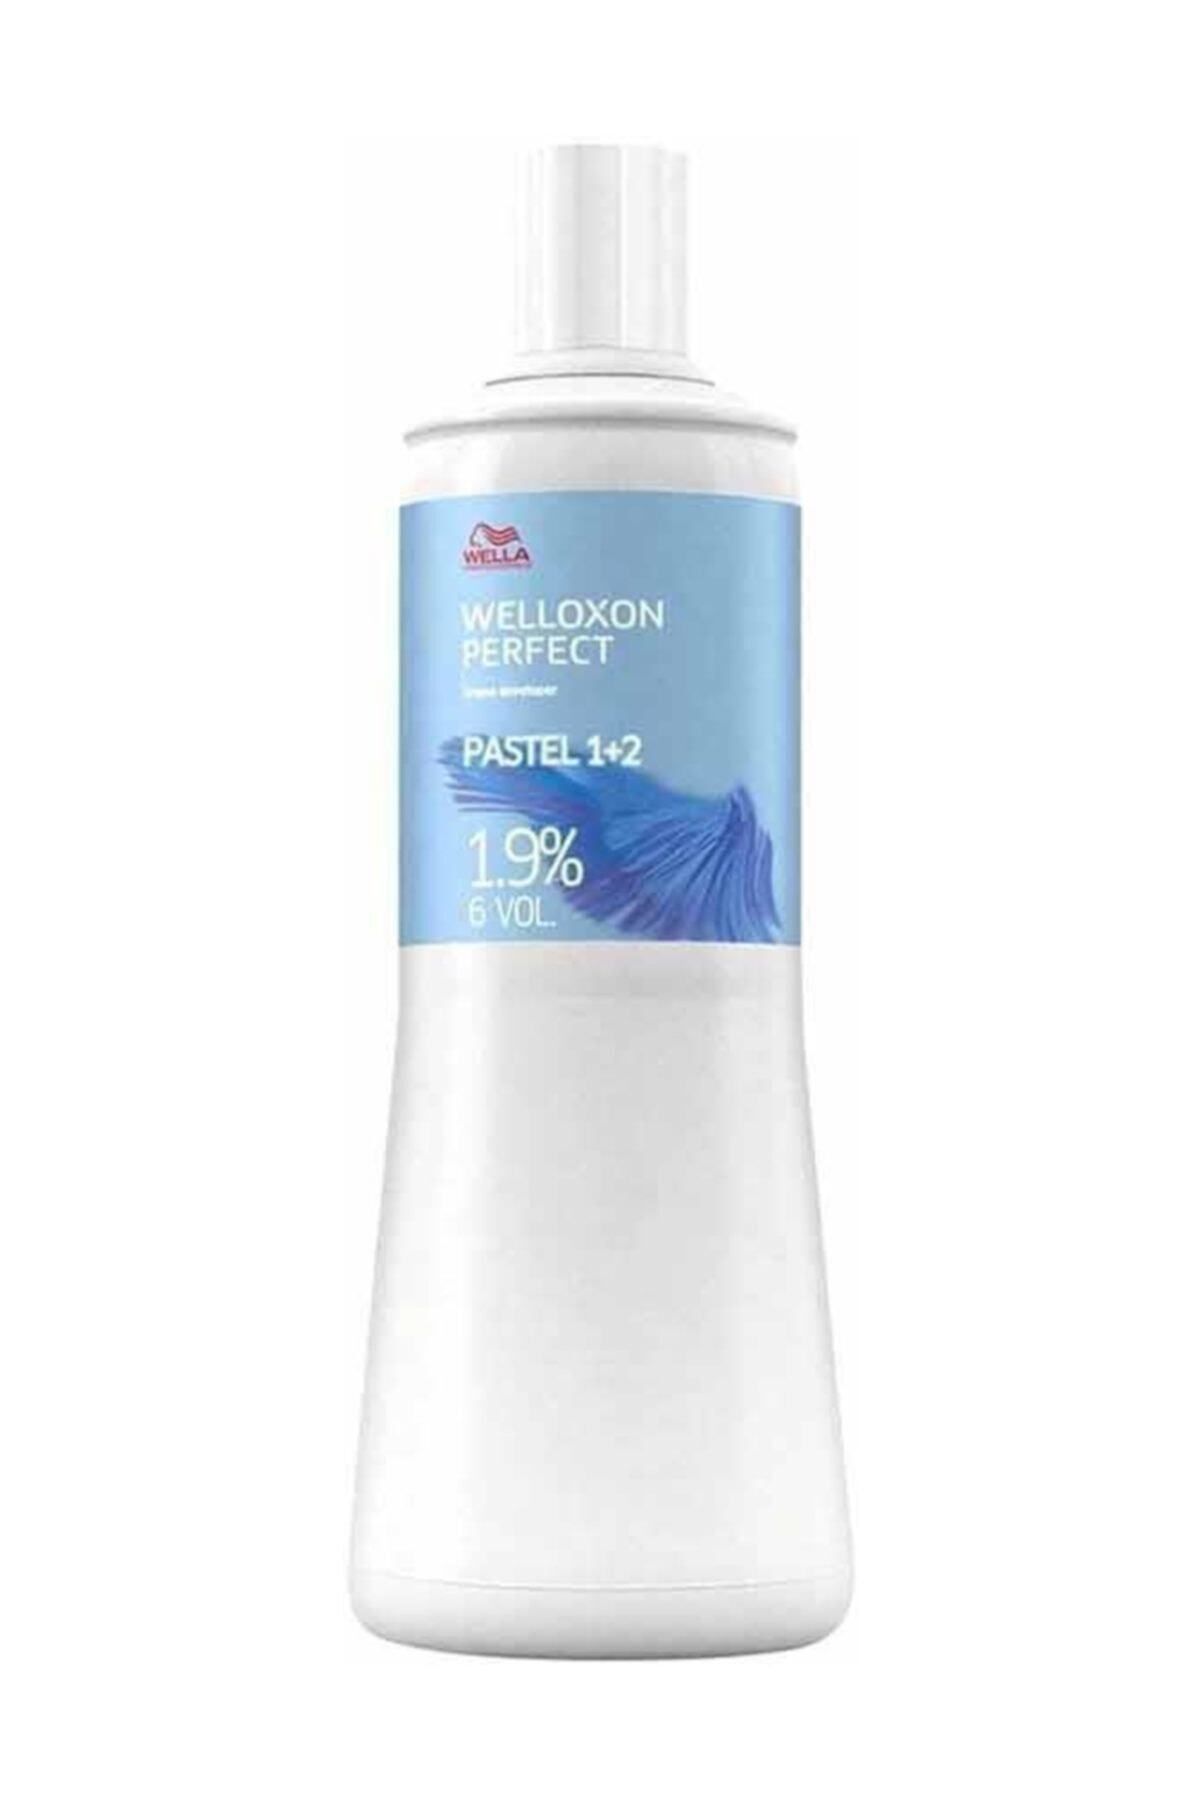 Wella Welloxon Perfect Pastl 1+2 1.9% 6 Volume Oksidan 1000 ml